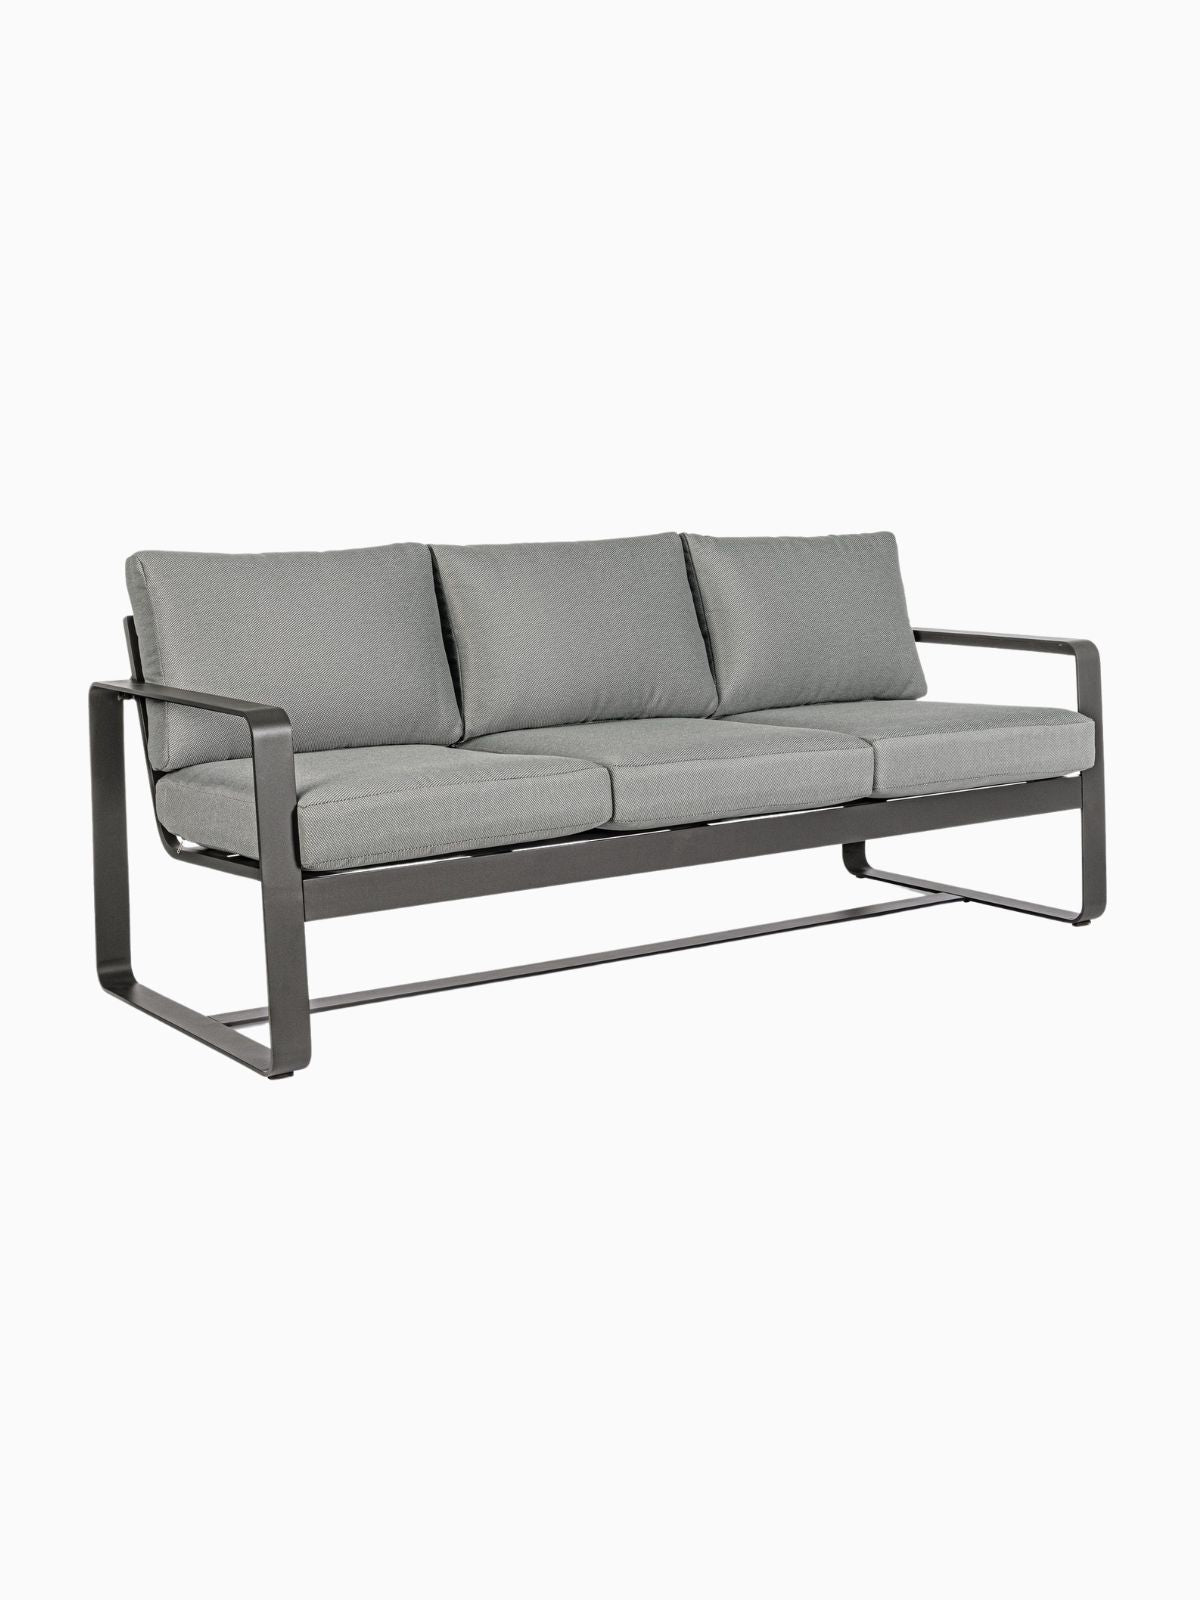 Divano da esterno 3 sedute Merrigan in alluminio, colore grigio-1